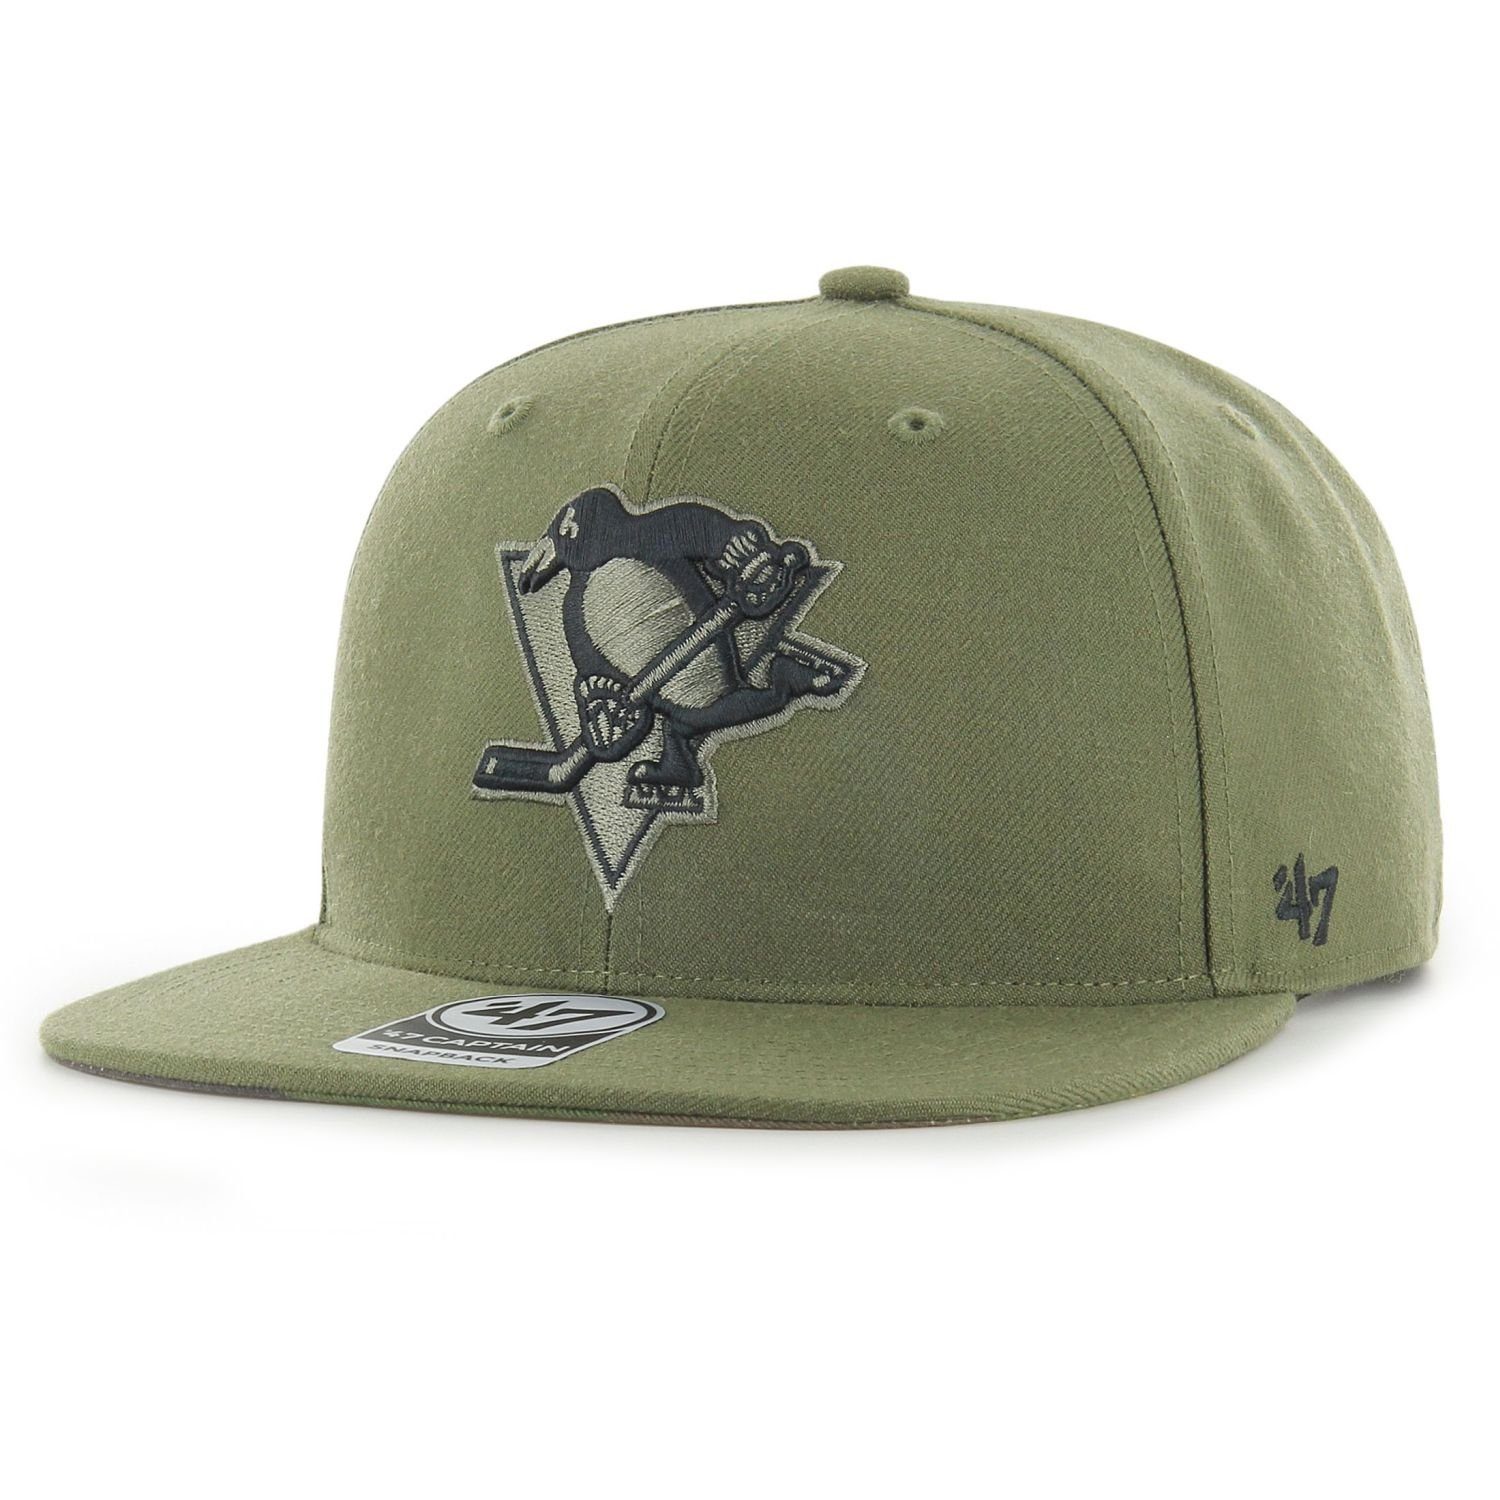 '47 Brand Snapback Cap CAPTAIN Pittsburgh Penguins